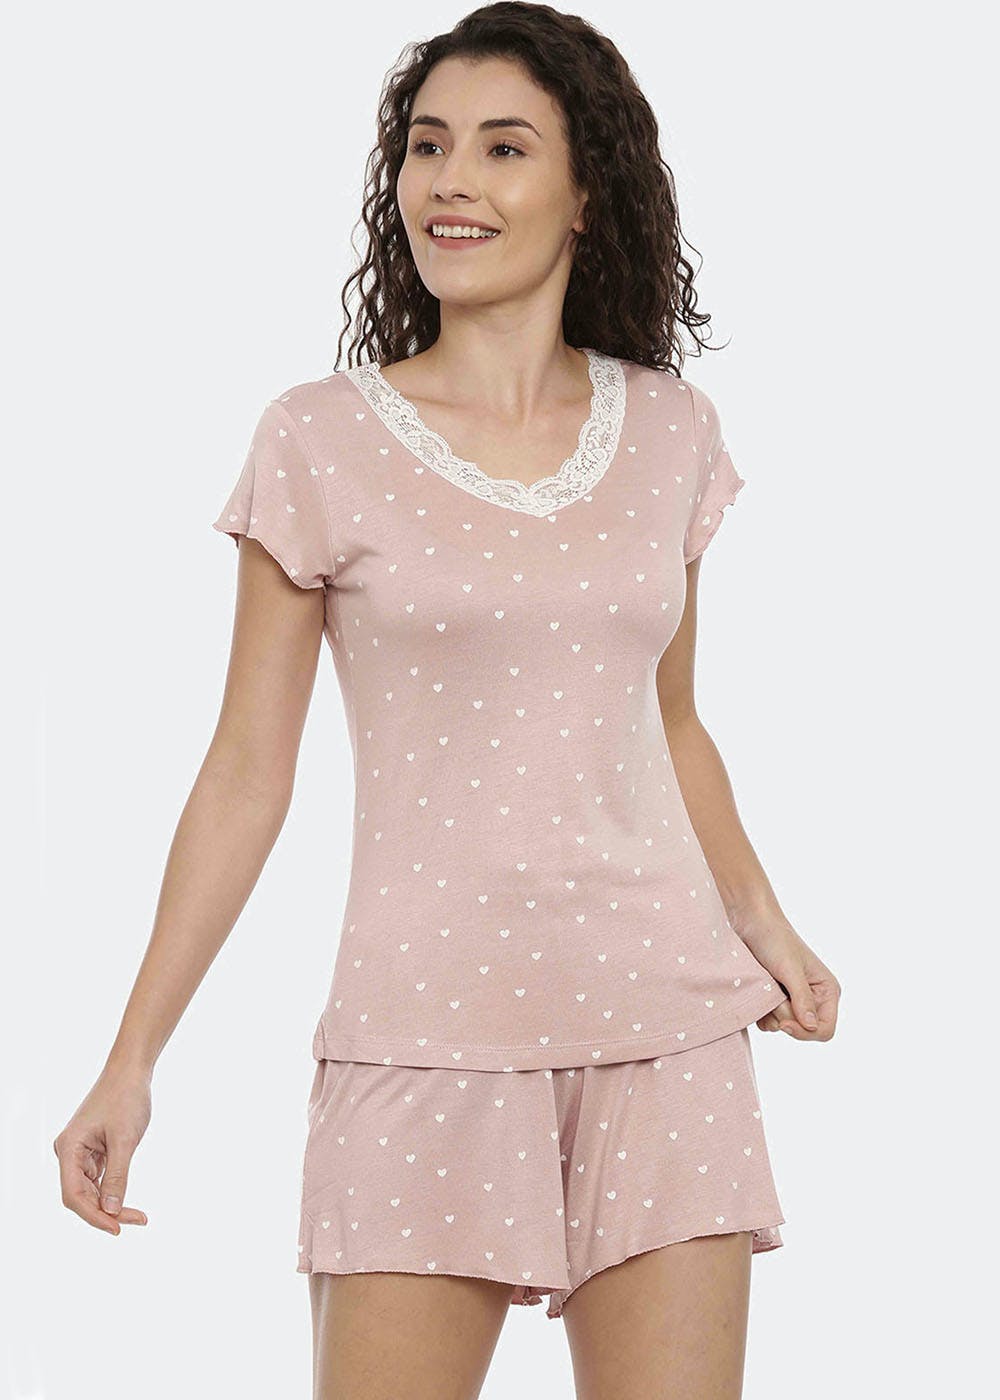 Lace Detail Pink Heart Printed Nightsuit Shorts Set